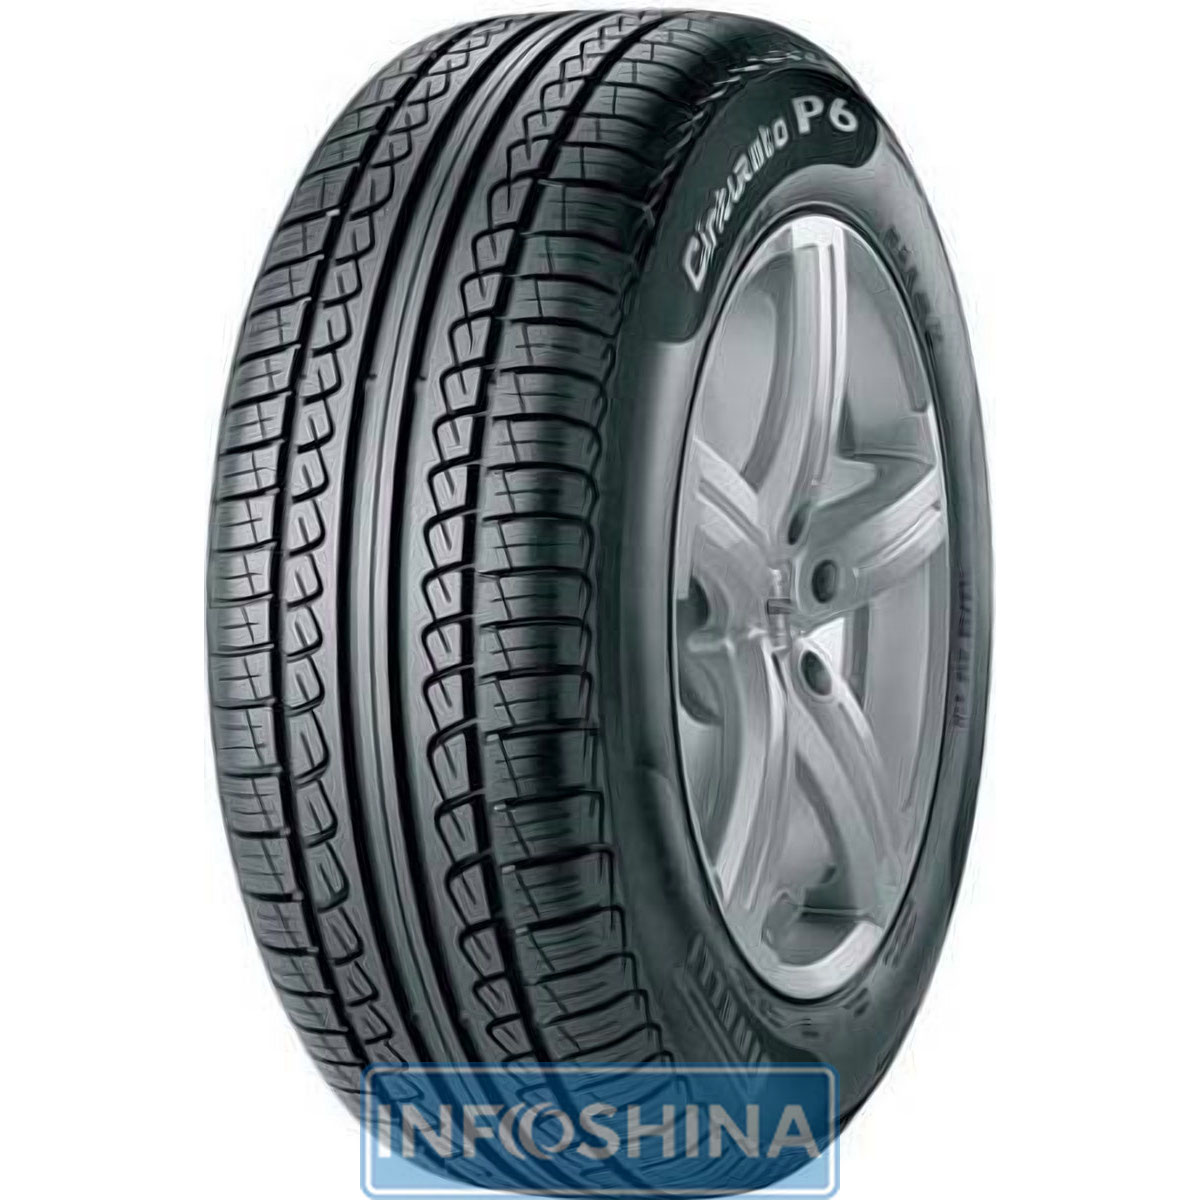 Купить шины Pirelli Cinturato P6 185/55 R16 87H MO